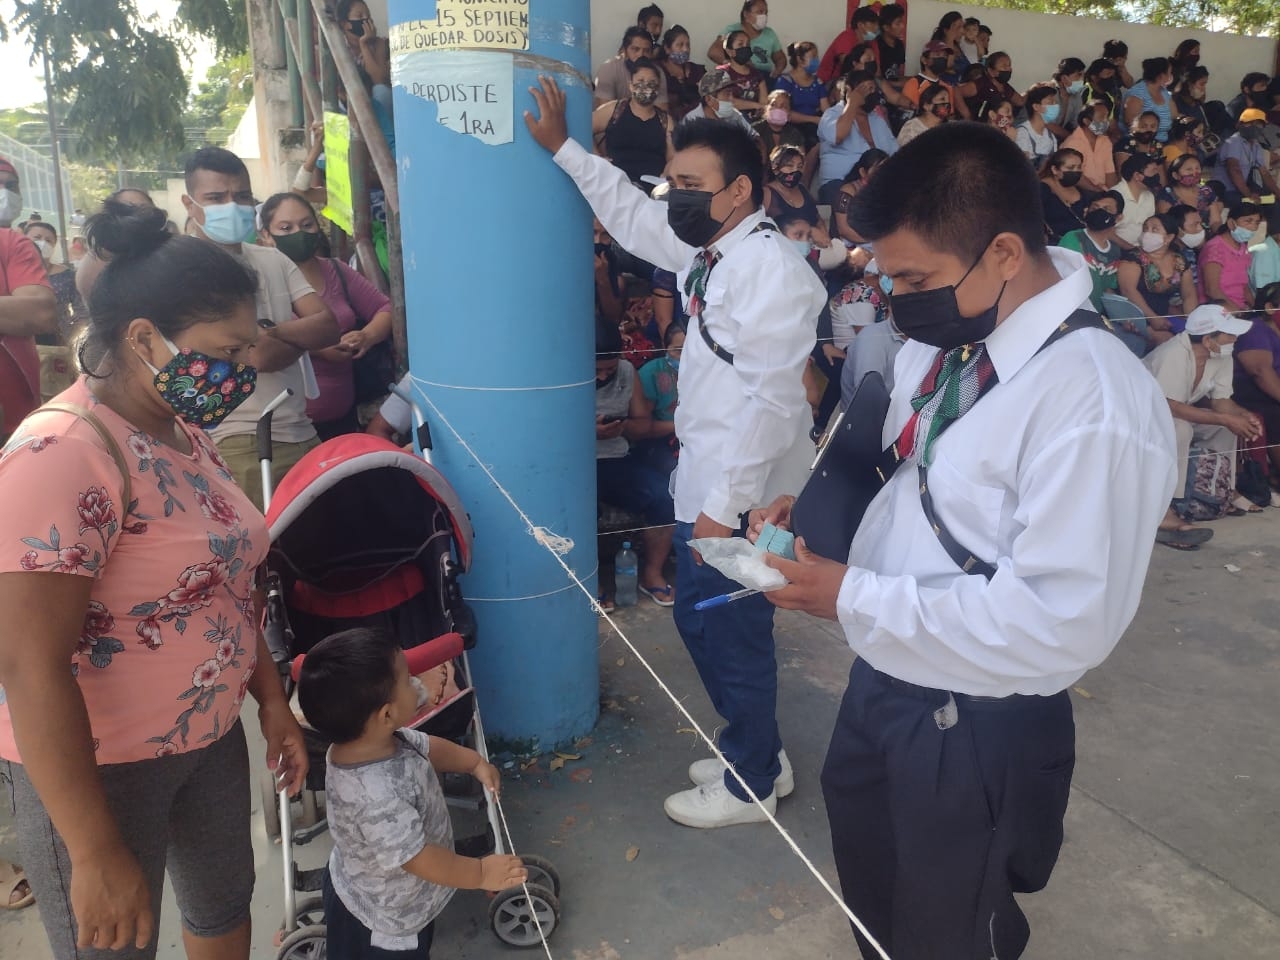 Al estilo mexicano, reciben a 'Centennials' en centro de vacunación anticovid en Carrillo Puerto